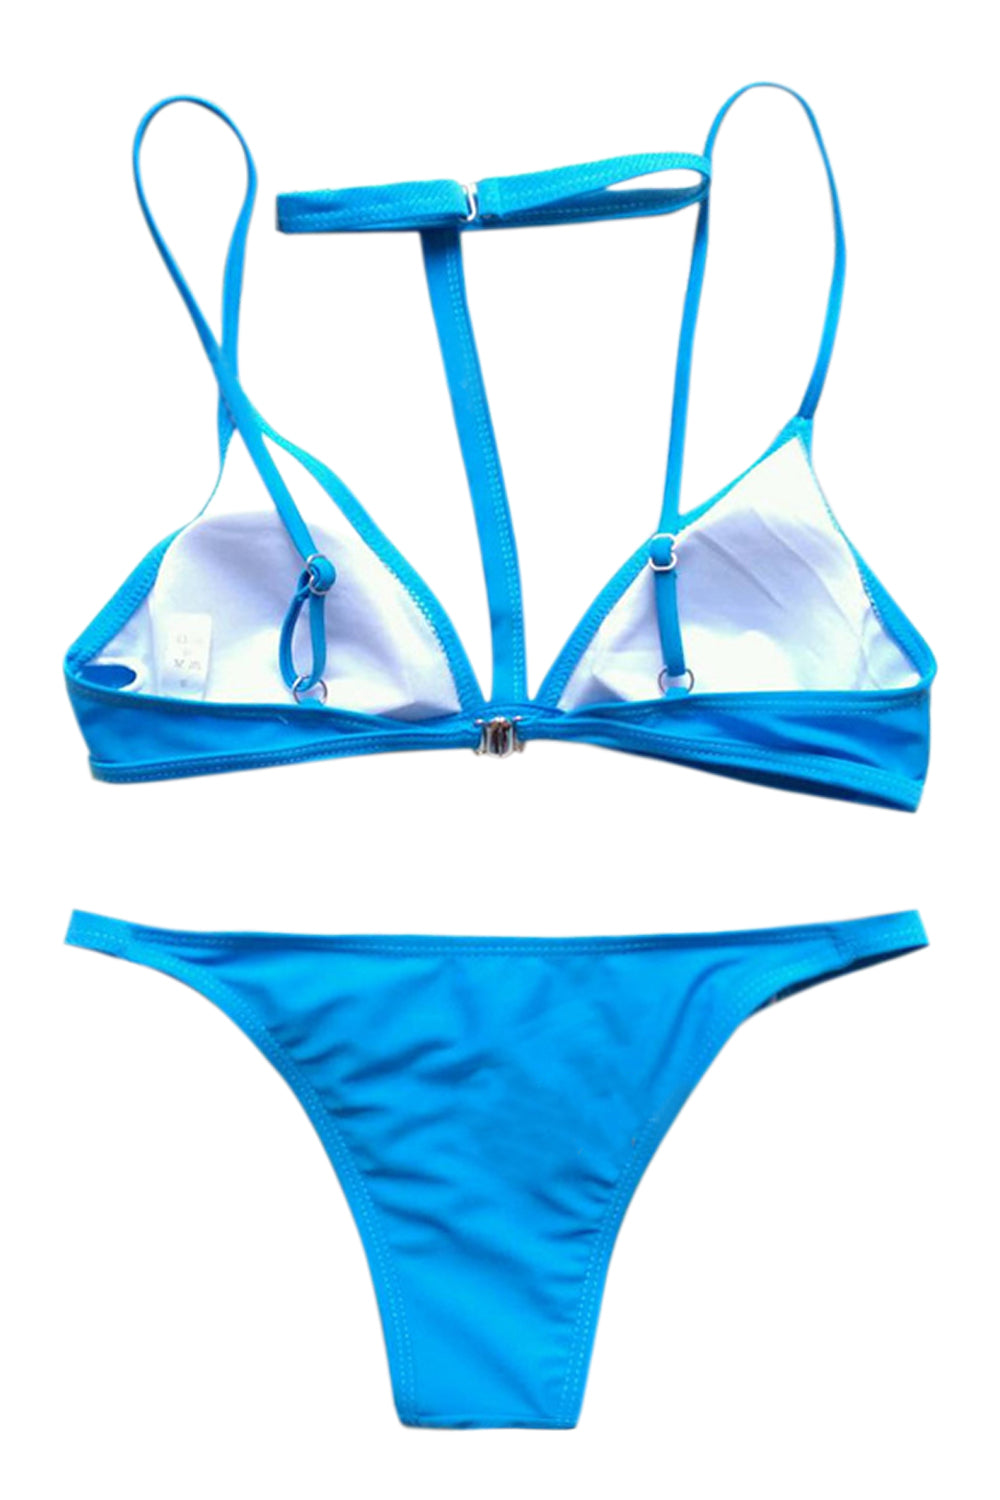 Iyasson Sexy Triangle Top Halter Bikini Sets